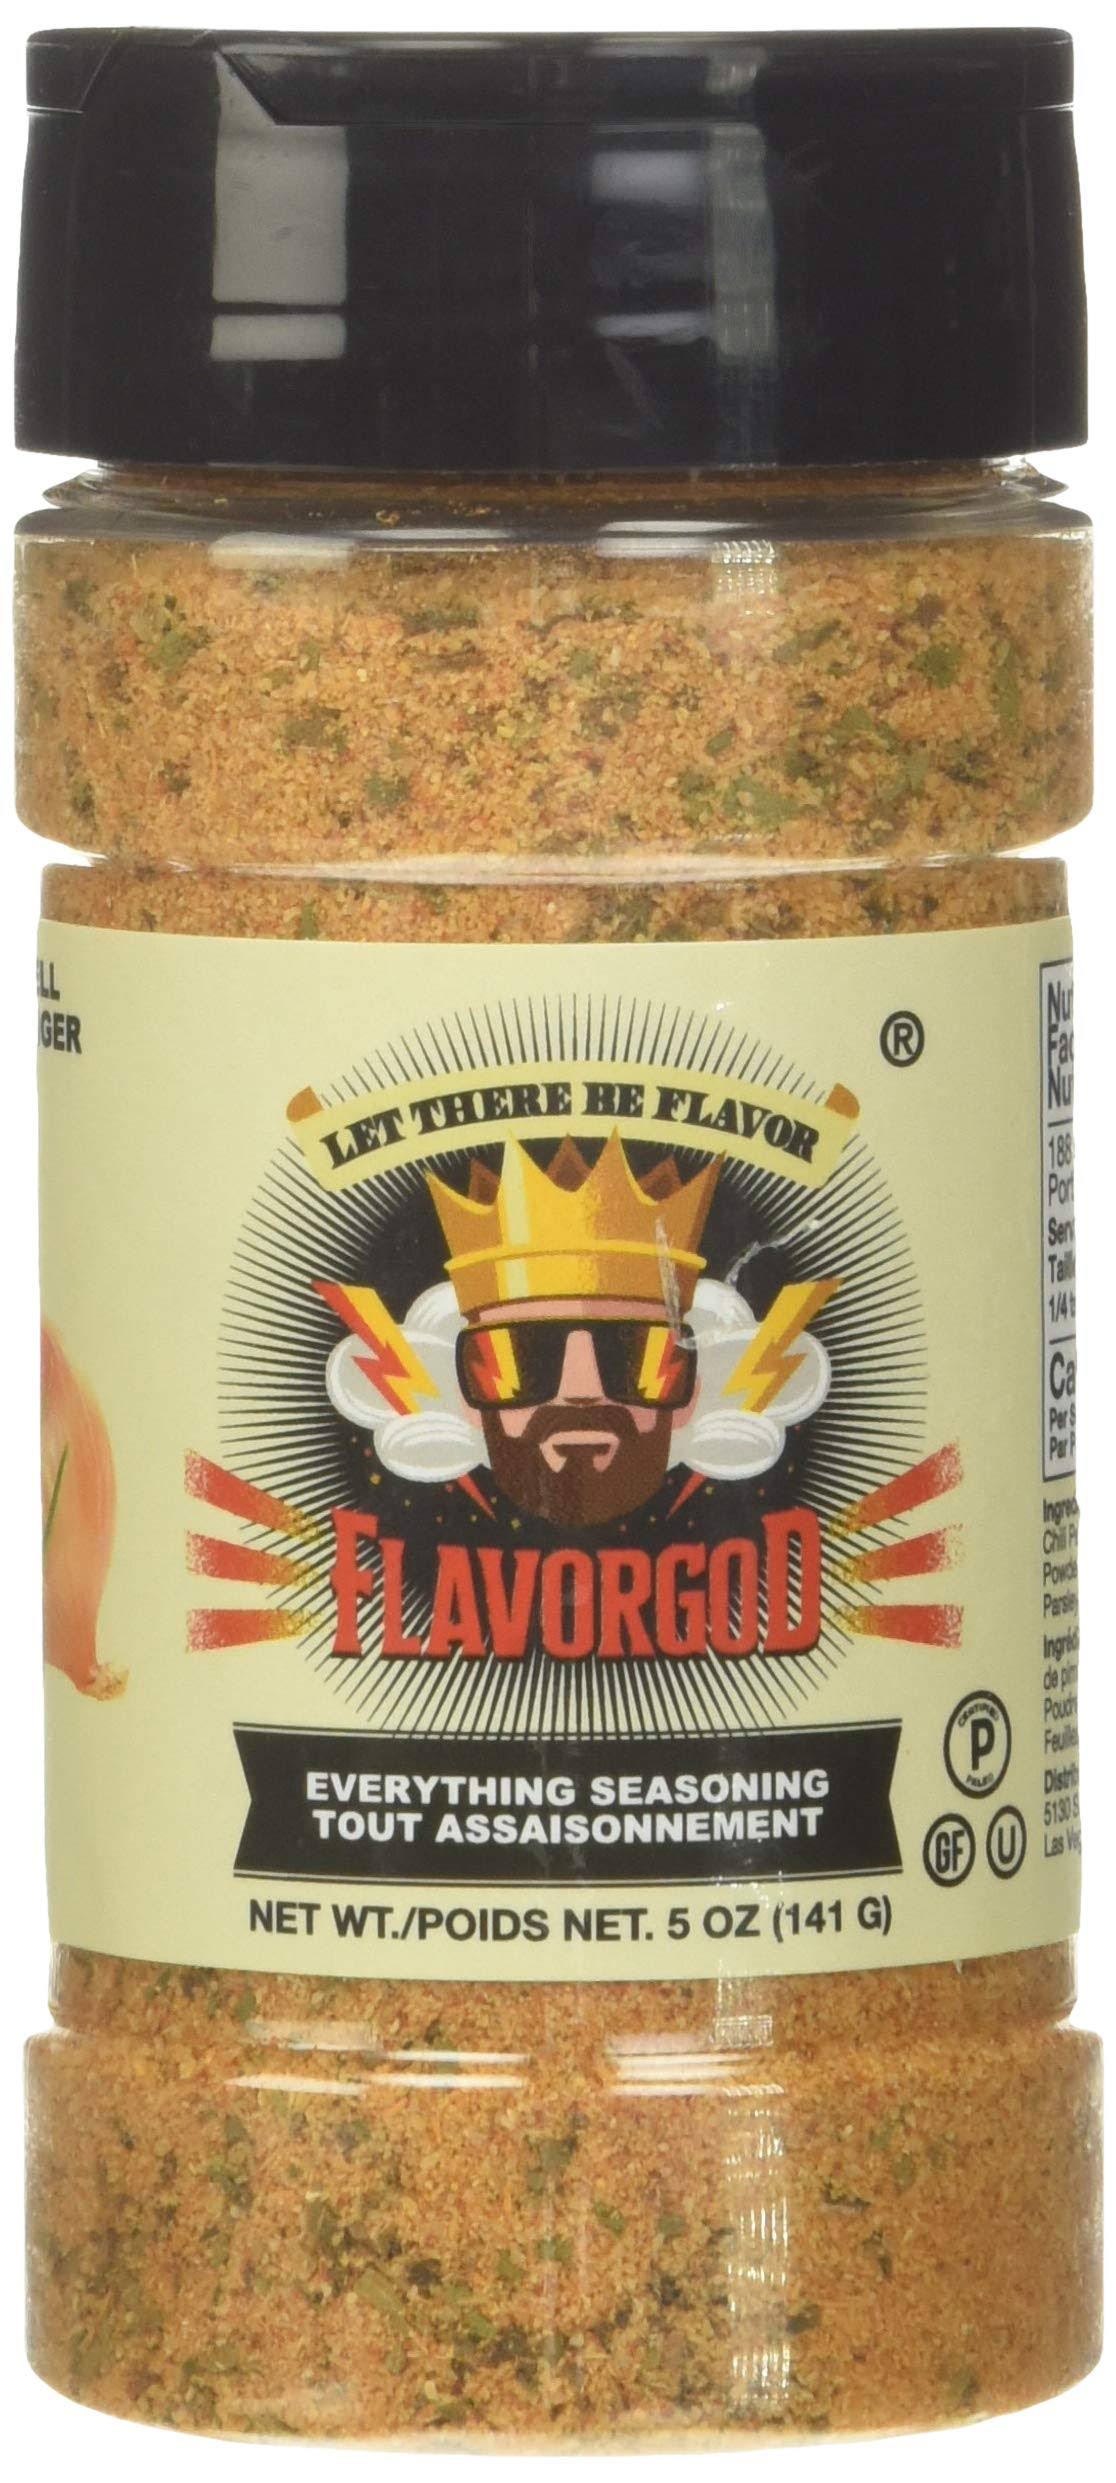 Flavor God - Seasoning Everything